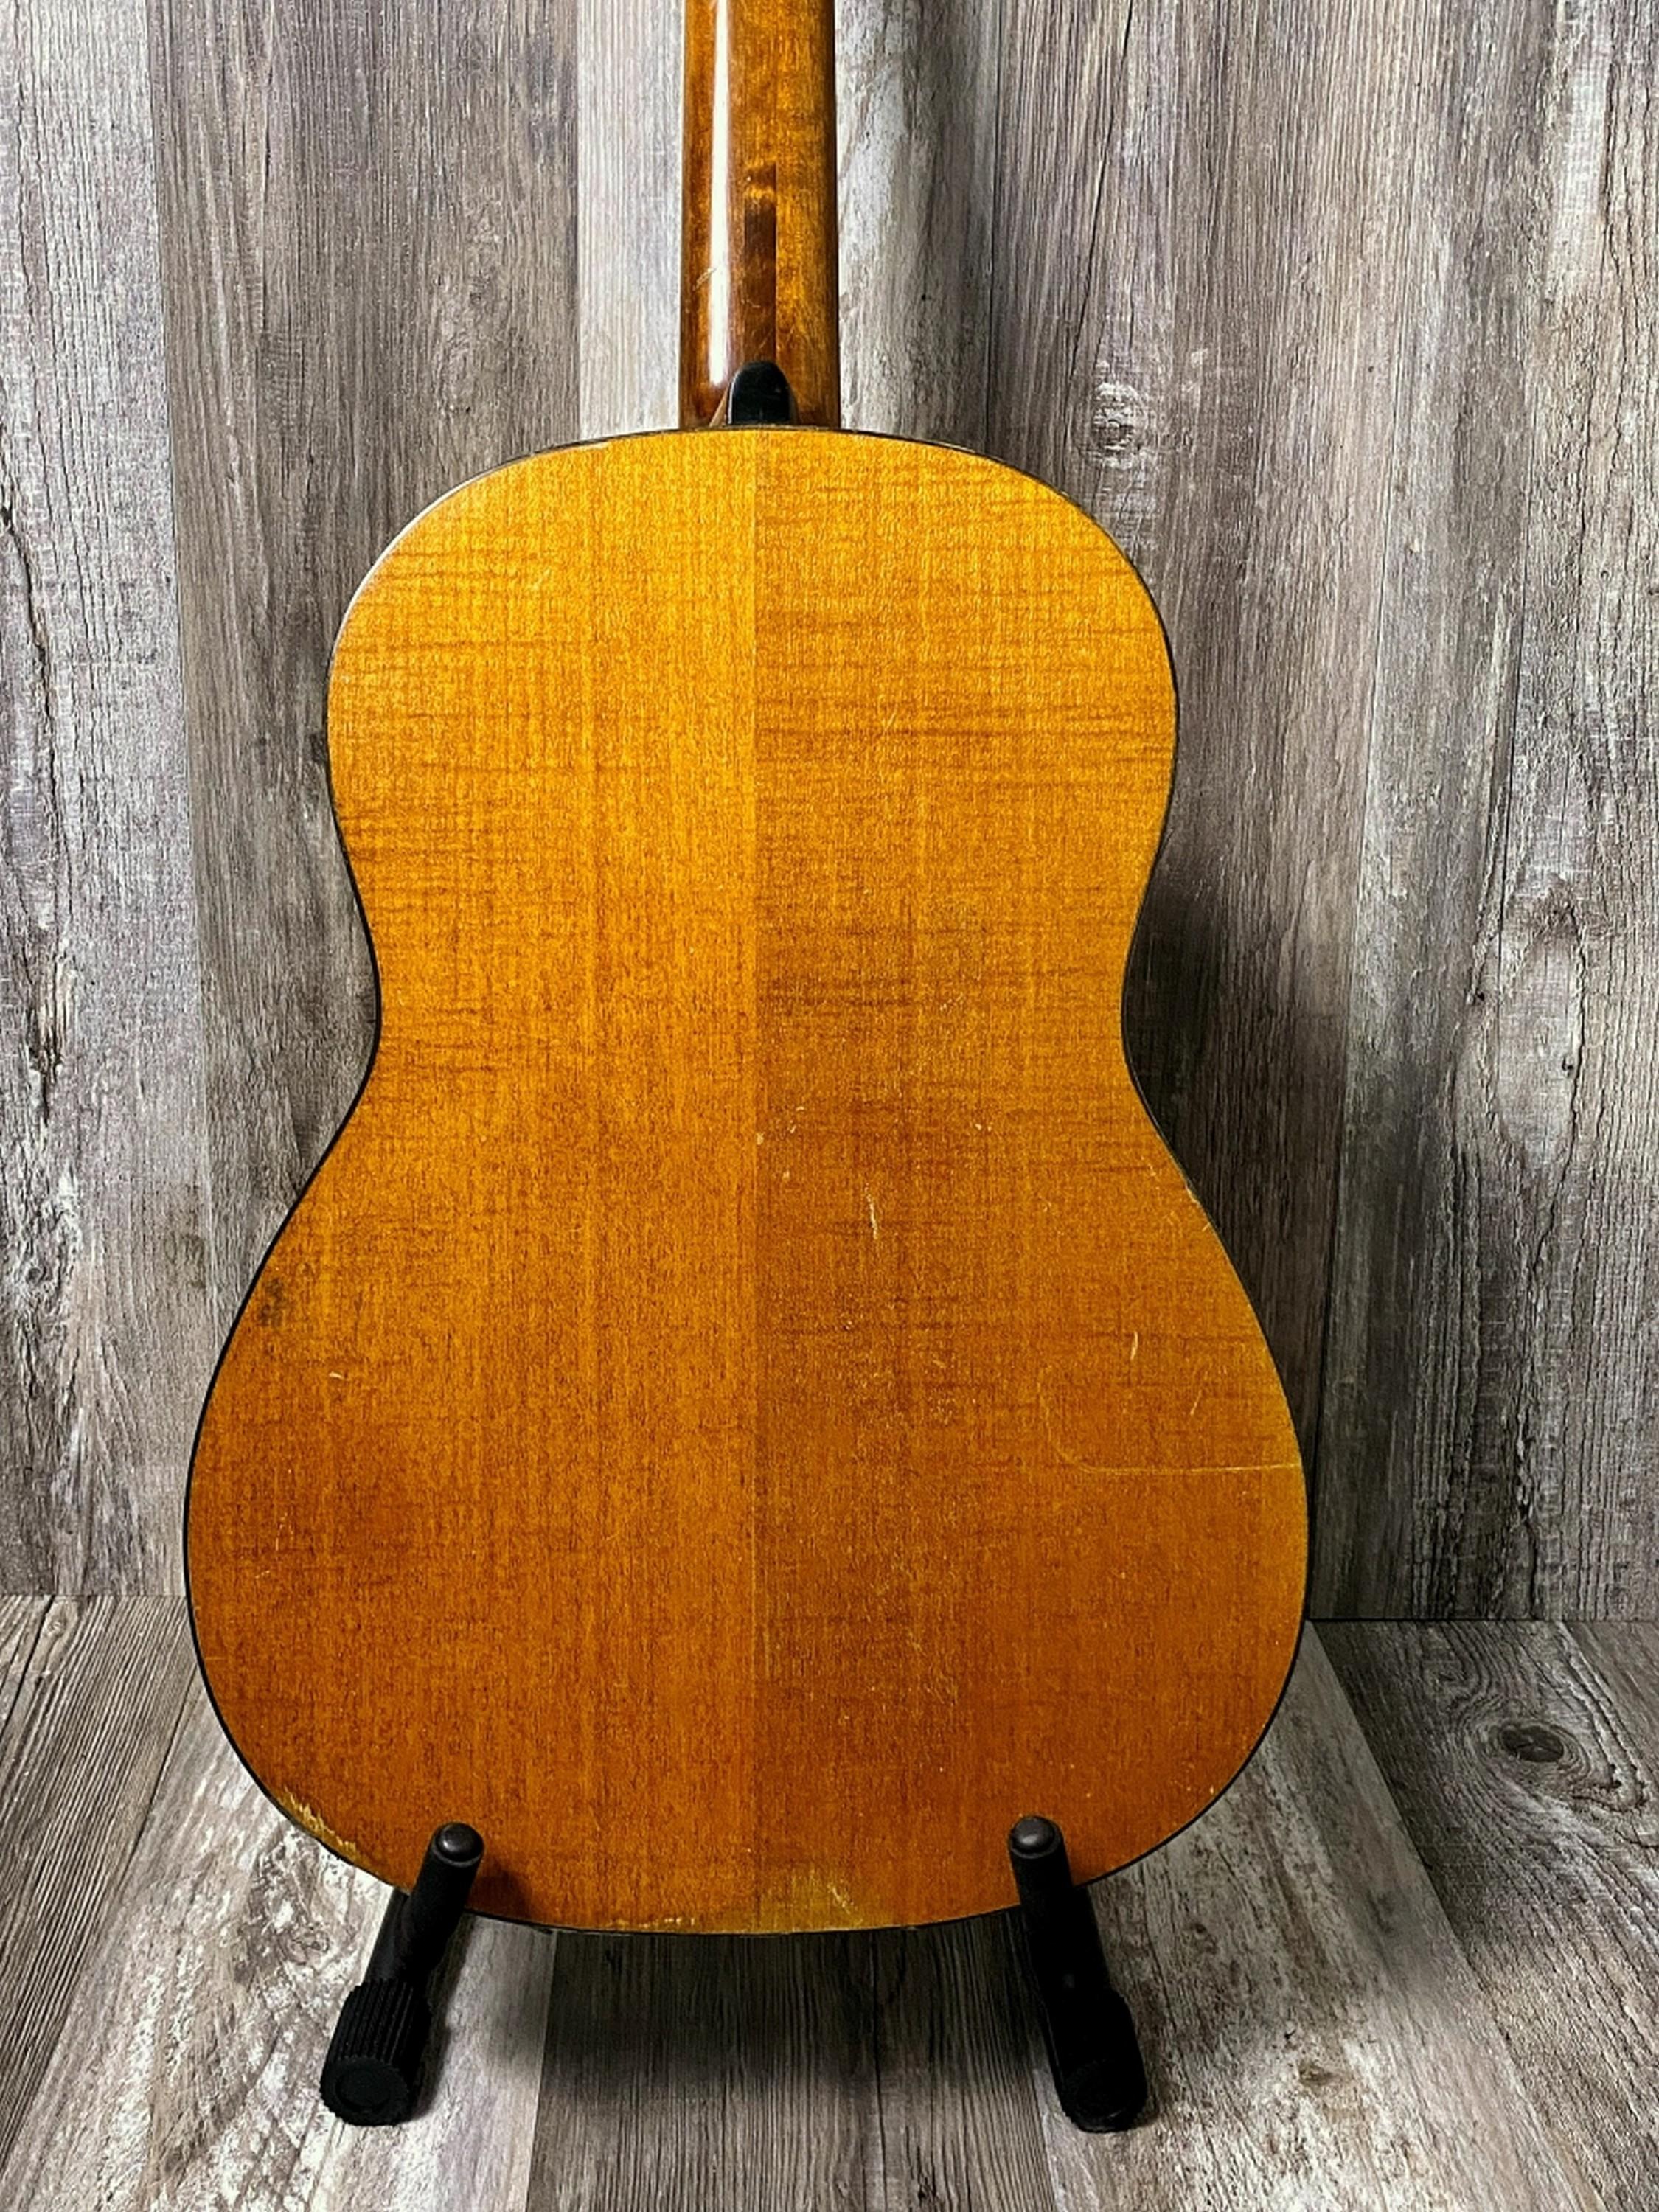 1969 Oscar Teller Acoustic Guitar w/ Hard Case